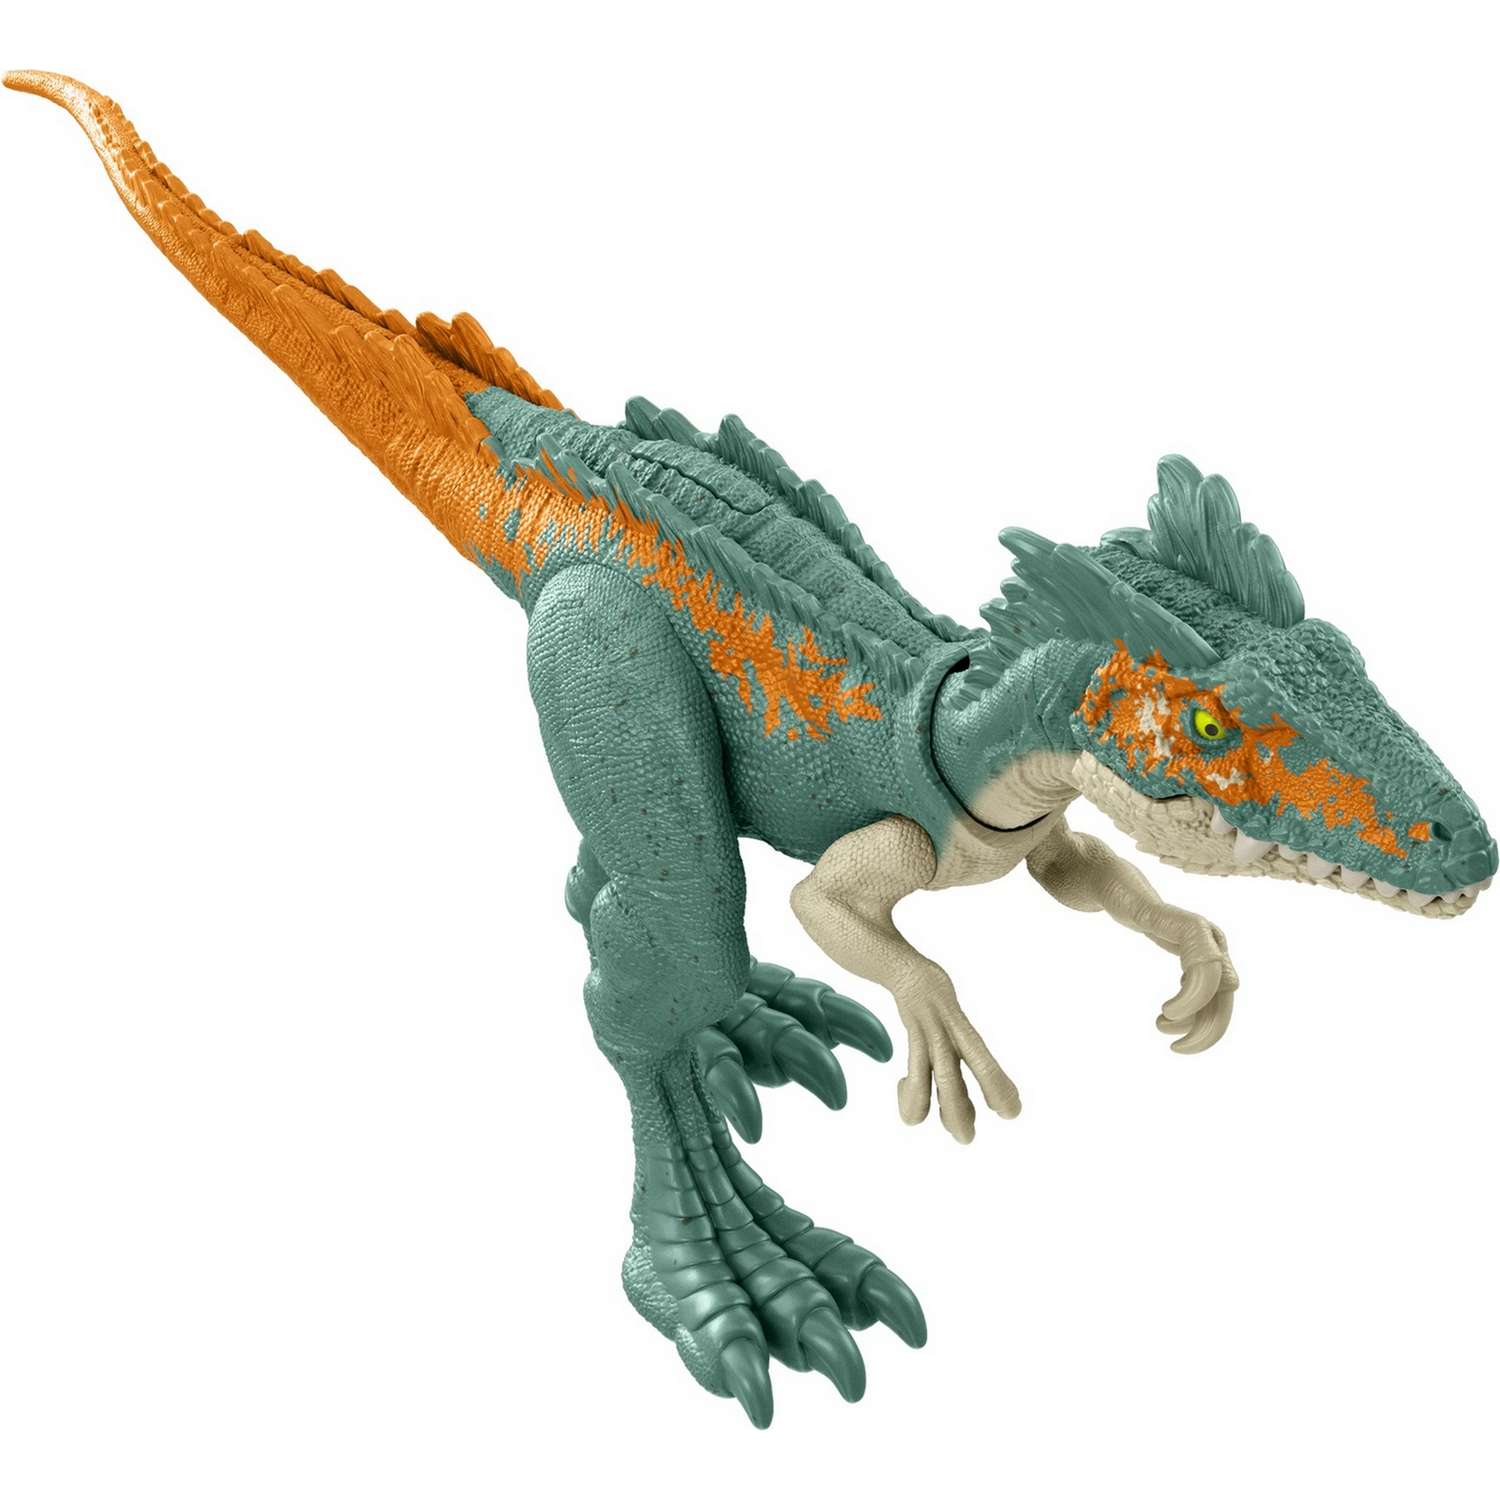 Фигурка Jurassic World Динозавр артикулируемый Морос Интрепидус HDX22 - фото 2